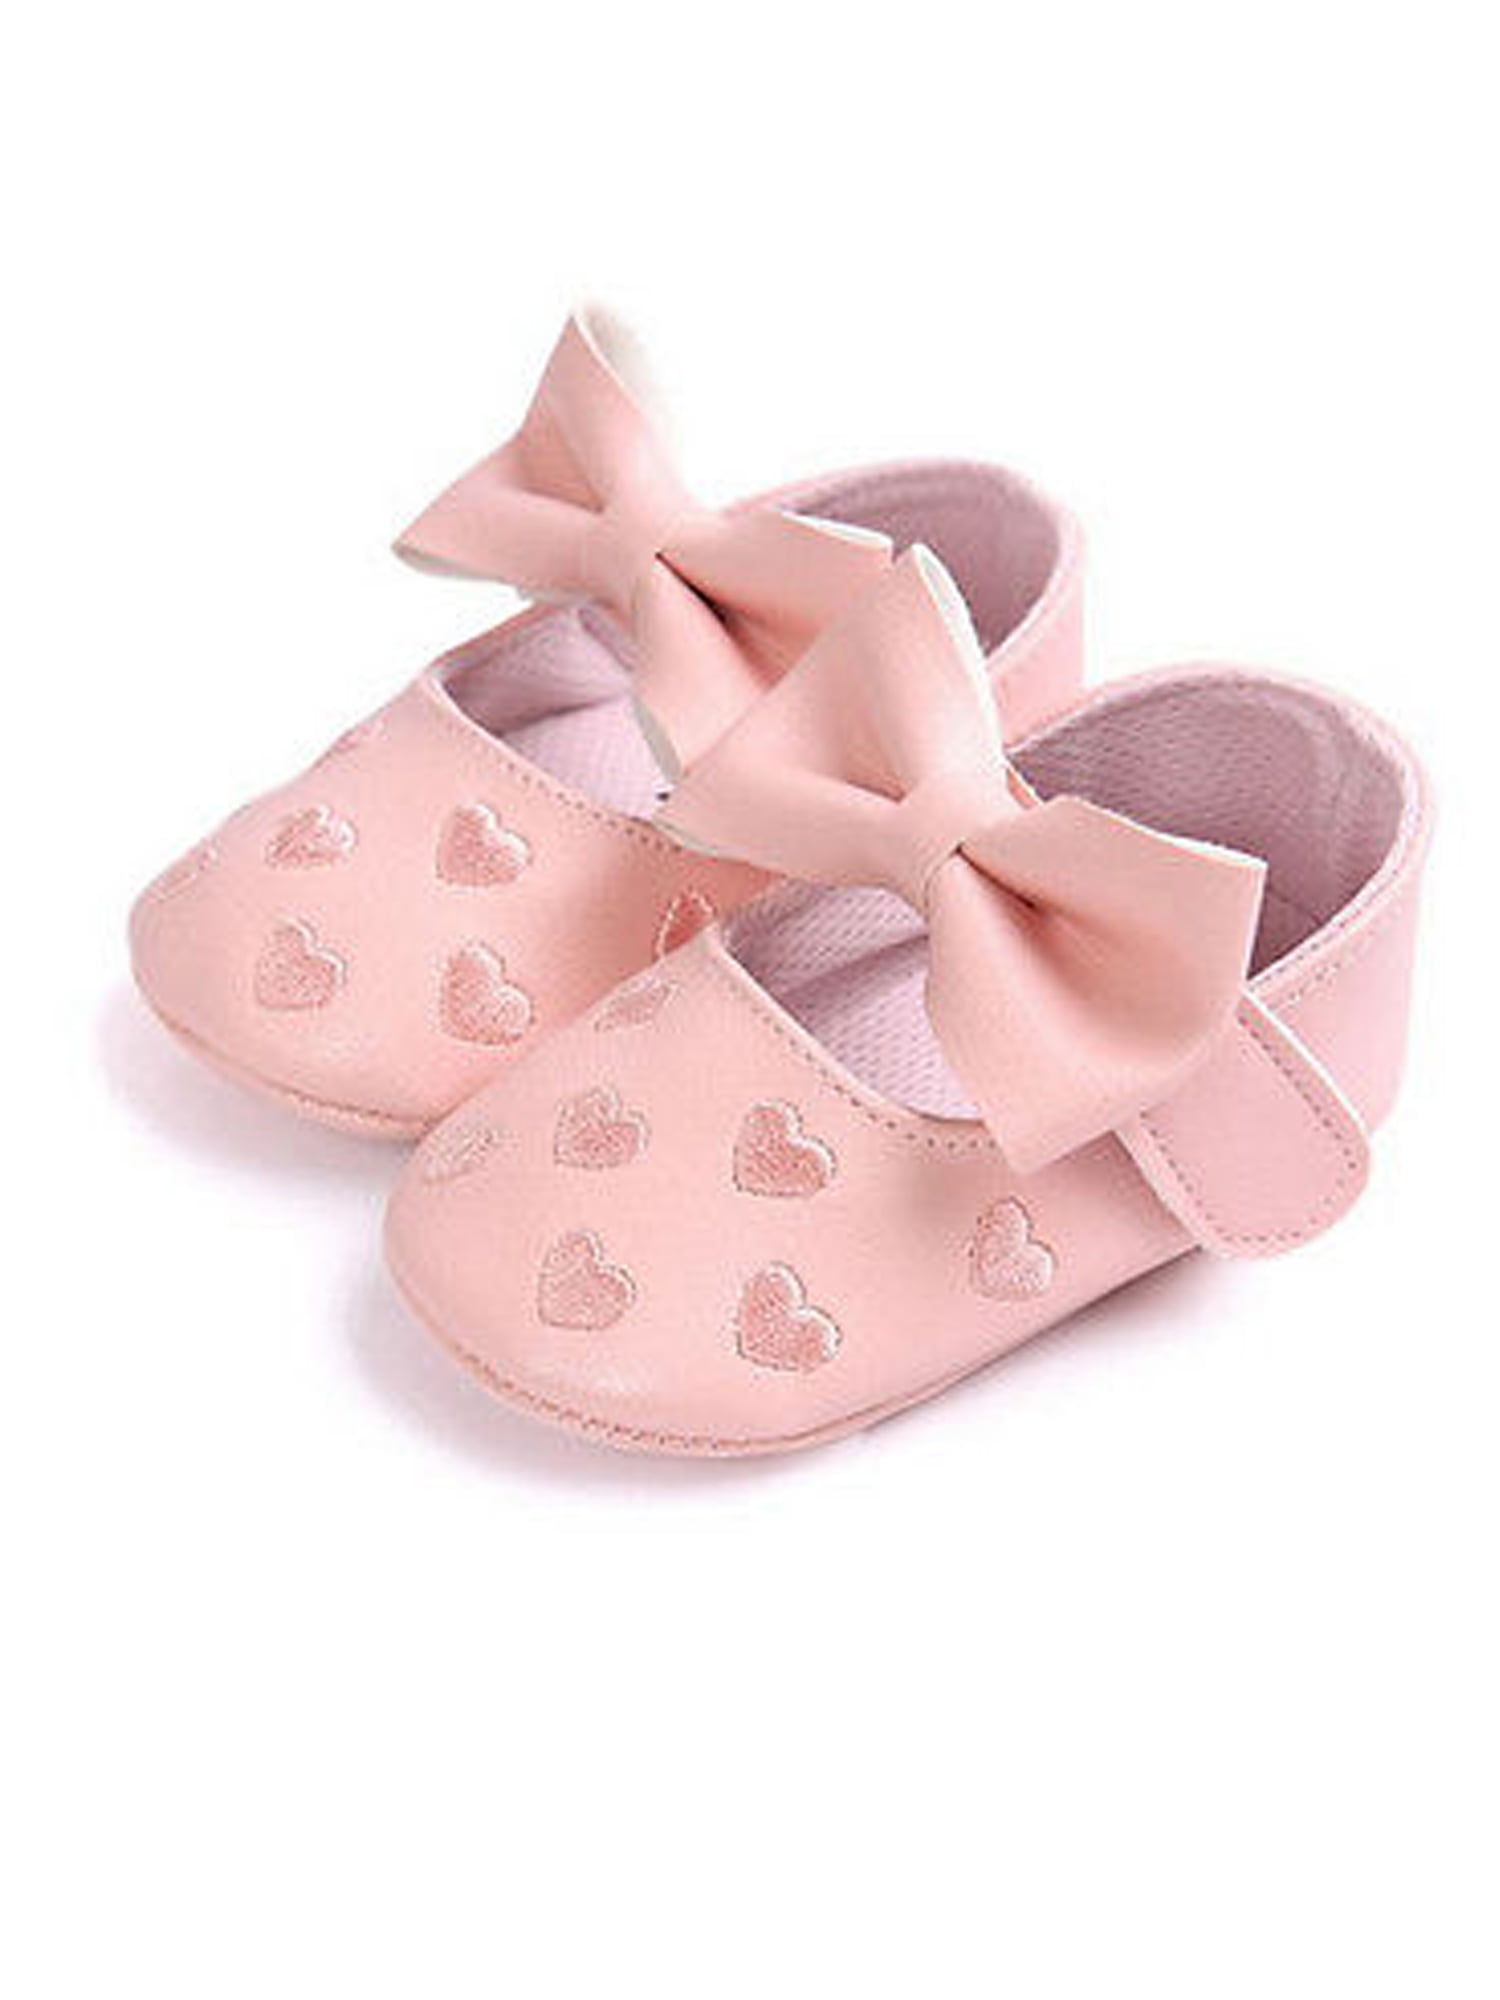 Newborn Infant Girls Minnie Mouse Soft Sole Prewalker Crib Shoes Toddler Sandals 